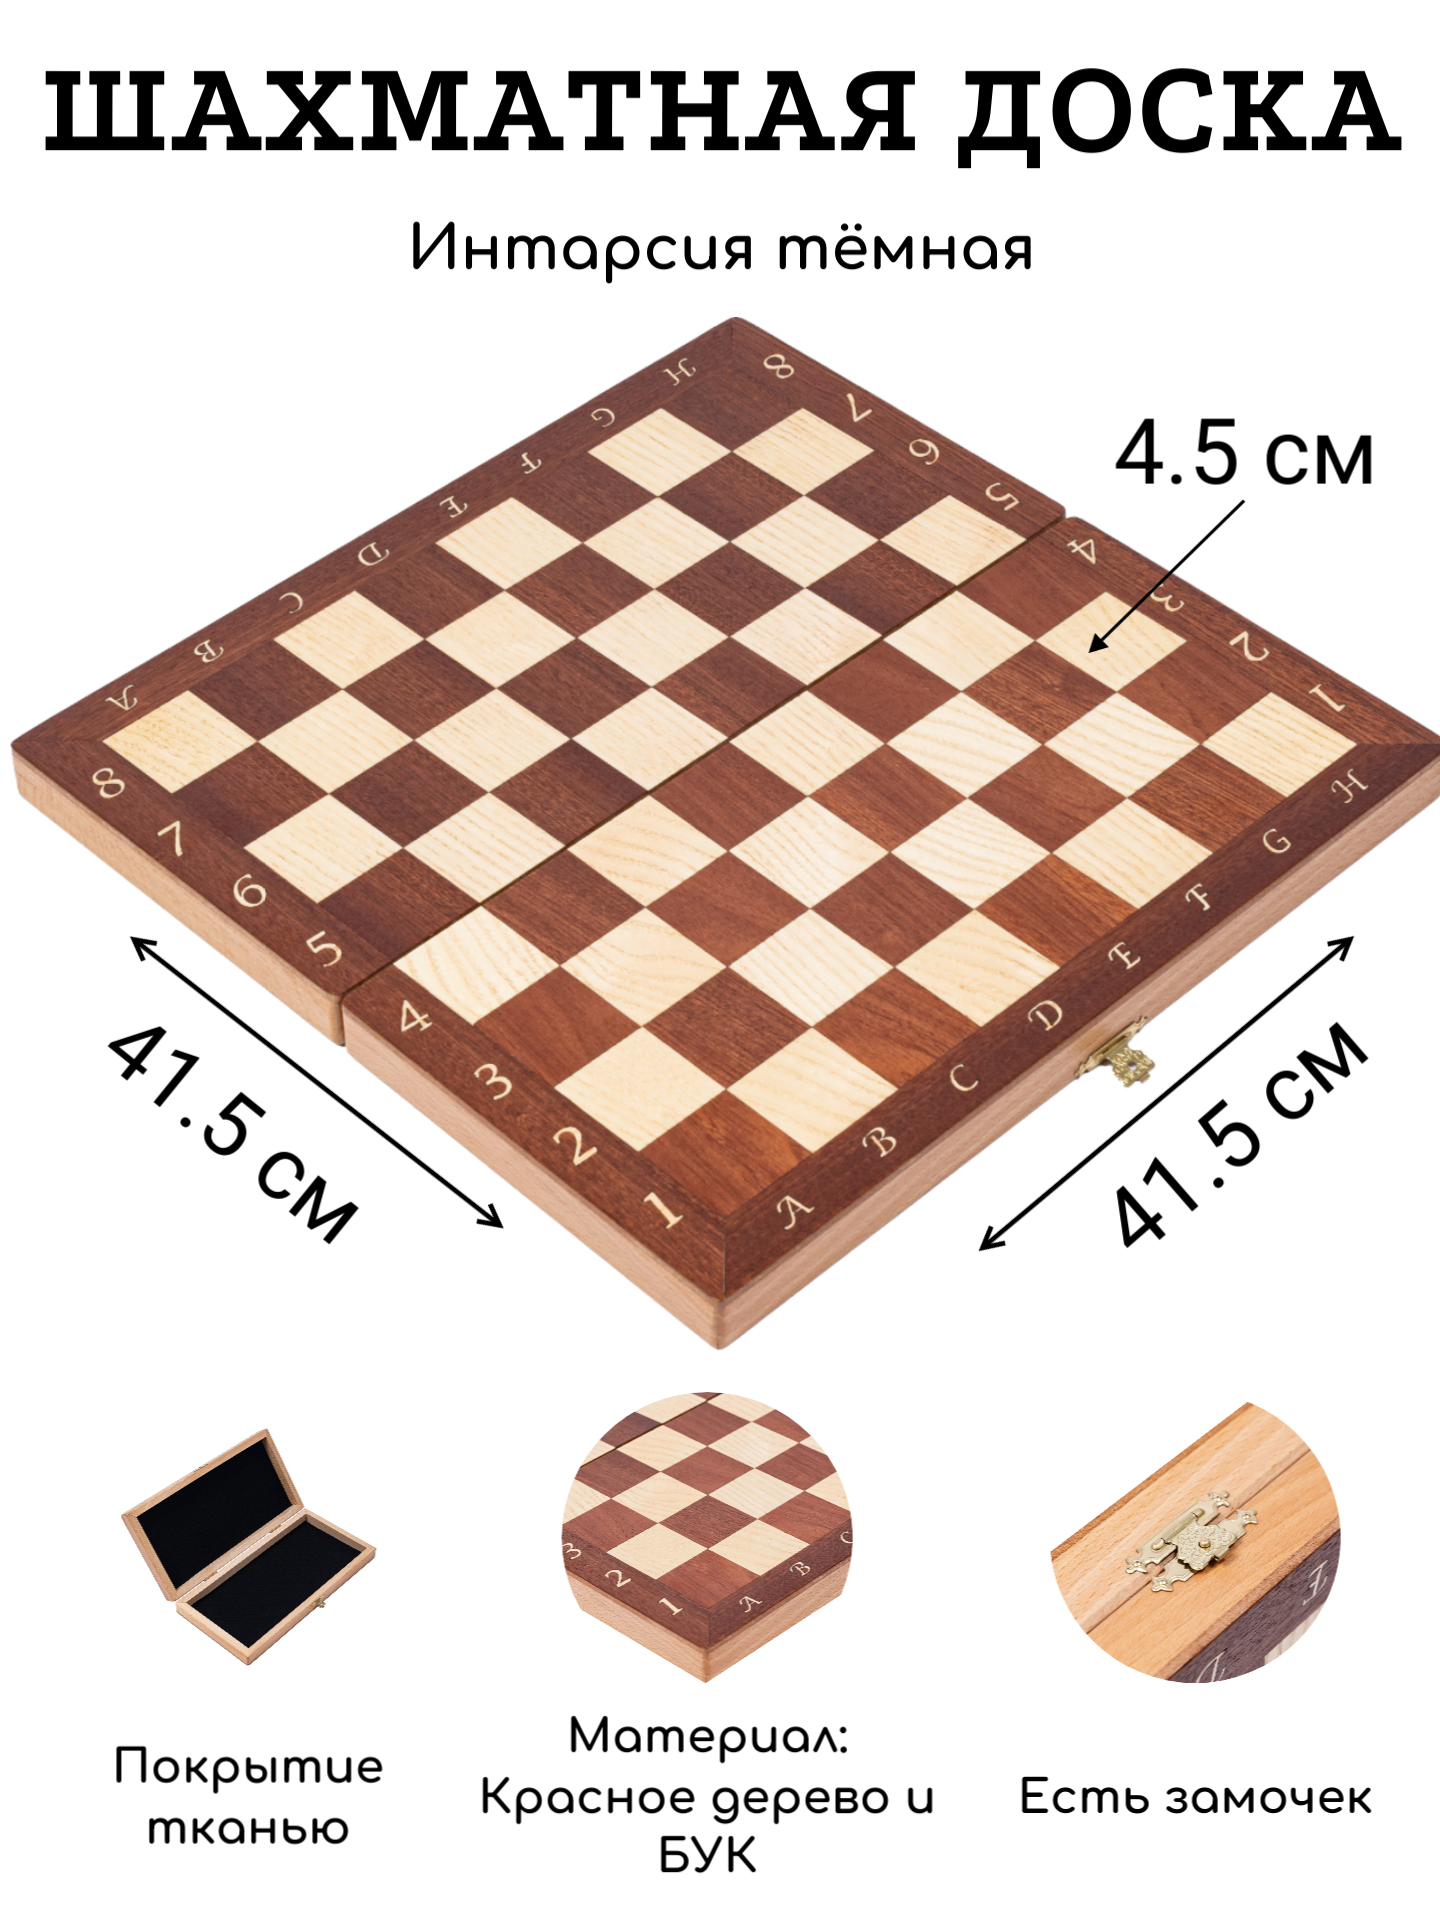 Шахматная доска без фигур Lavochkashop Турнирная 41 5 см интарсия stav041